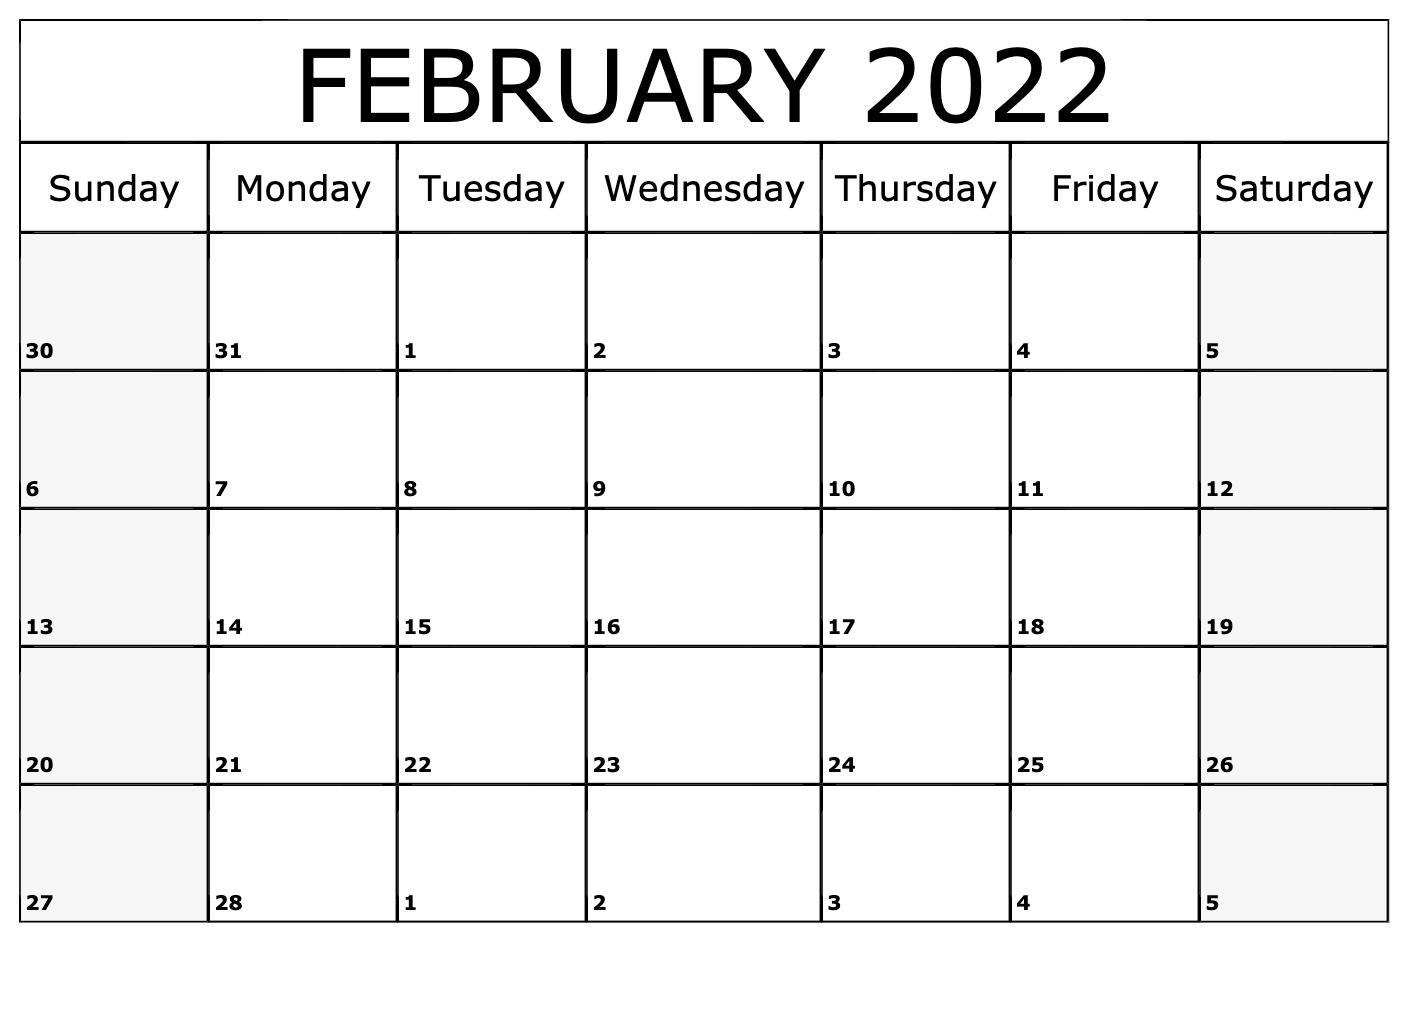 February 2022 Calendar With Federal Holidays